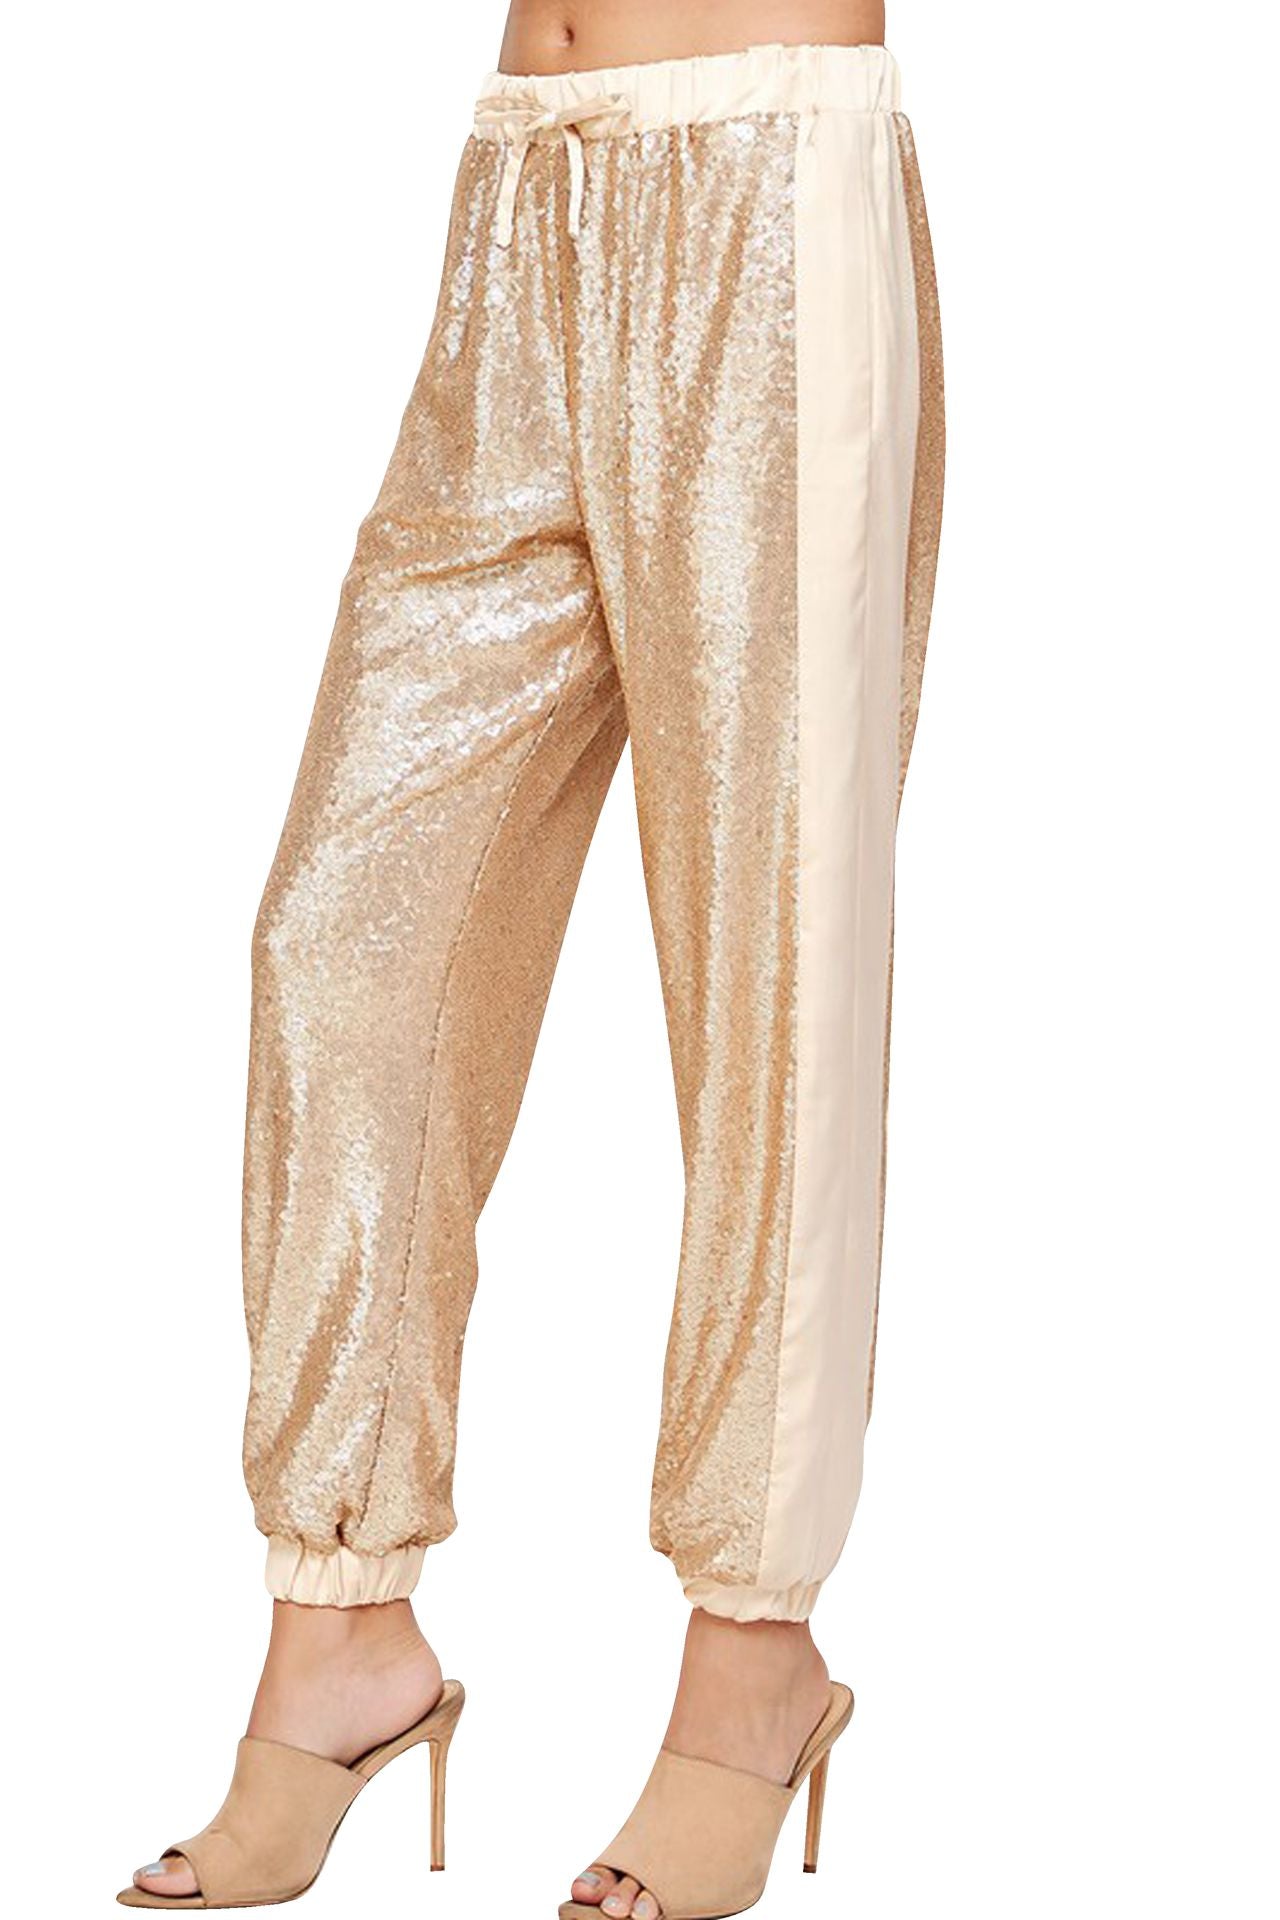 "sequin pants jogger" "sequin jogging bottoms" "Kyle X Shahida" "plus size sequin jogger pants" "sequins joggers"